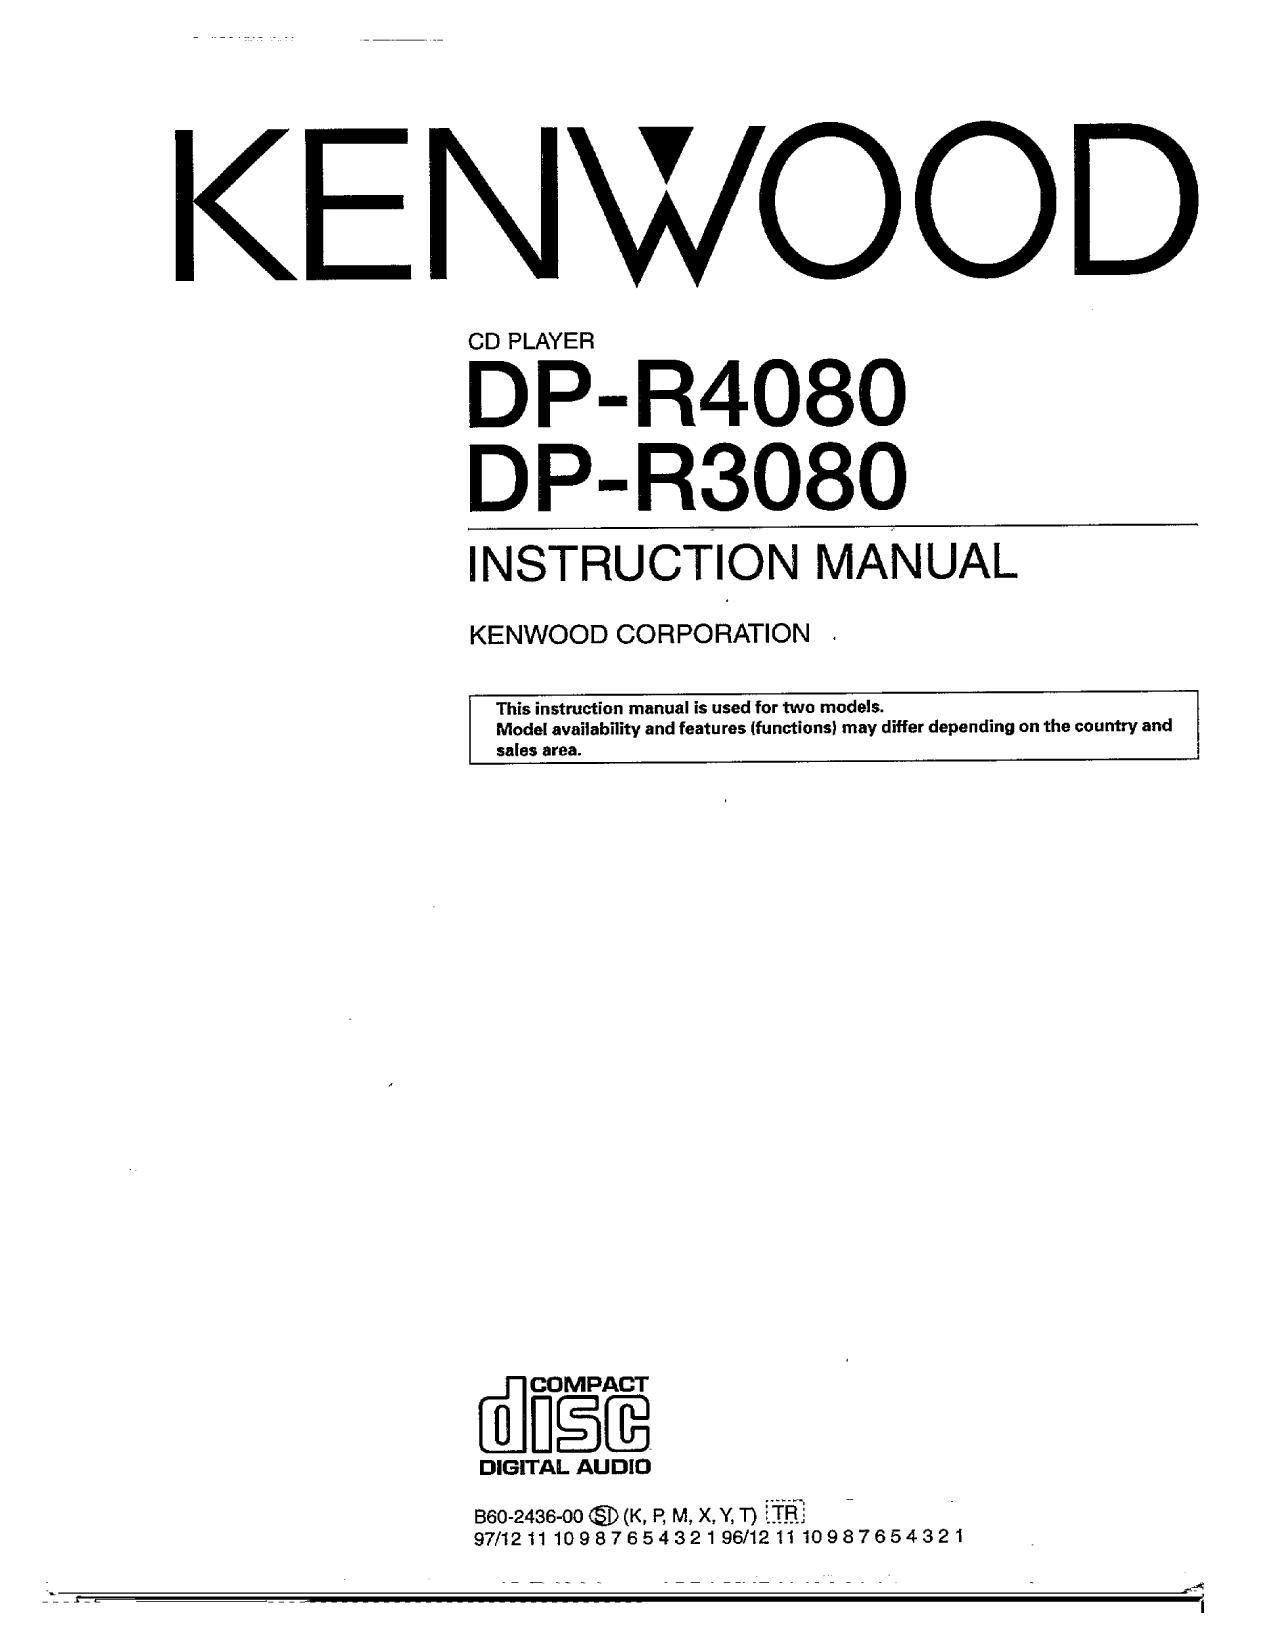 Kenwood DPR 3080 Owners Manual